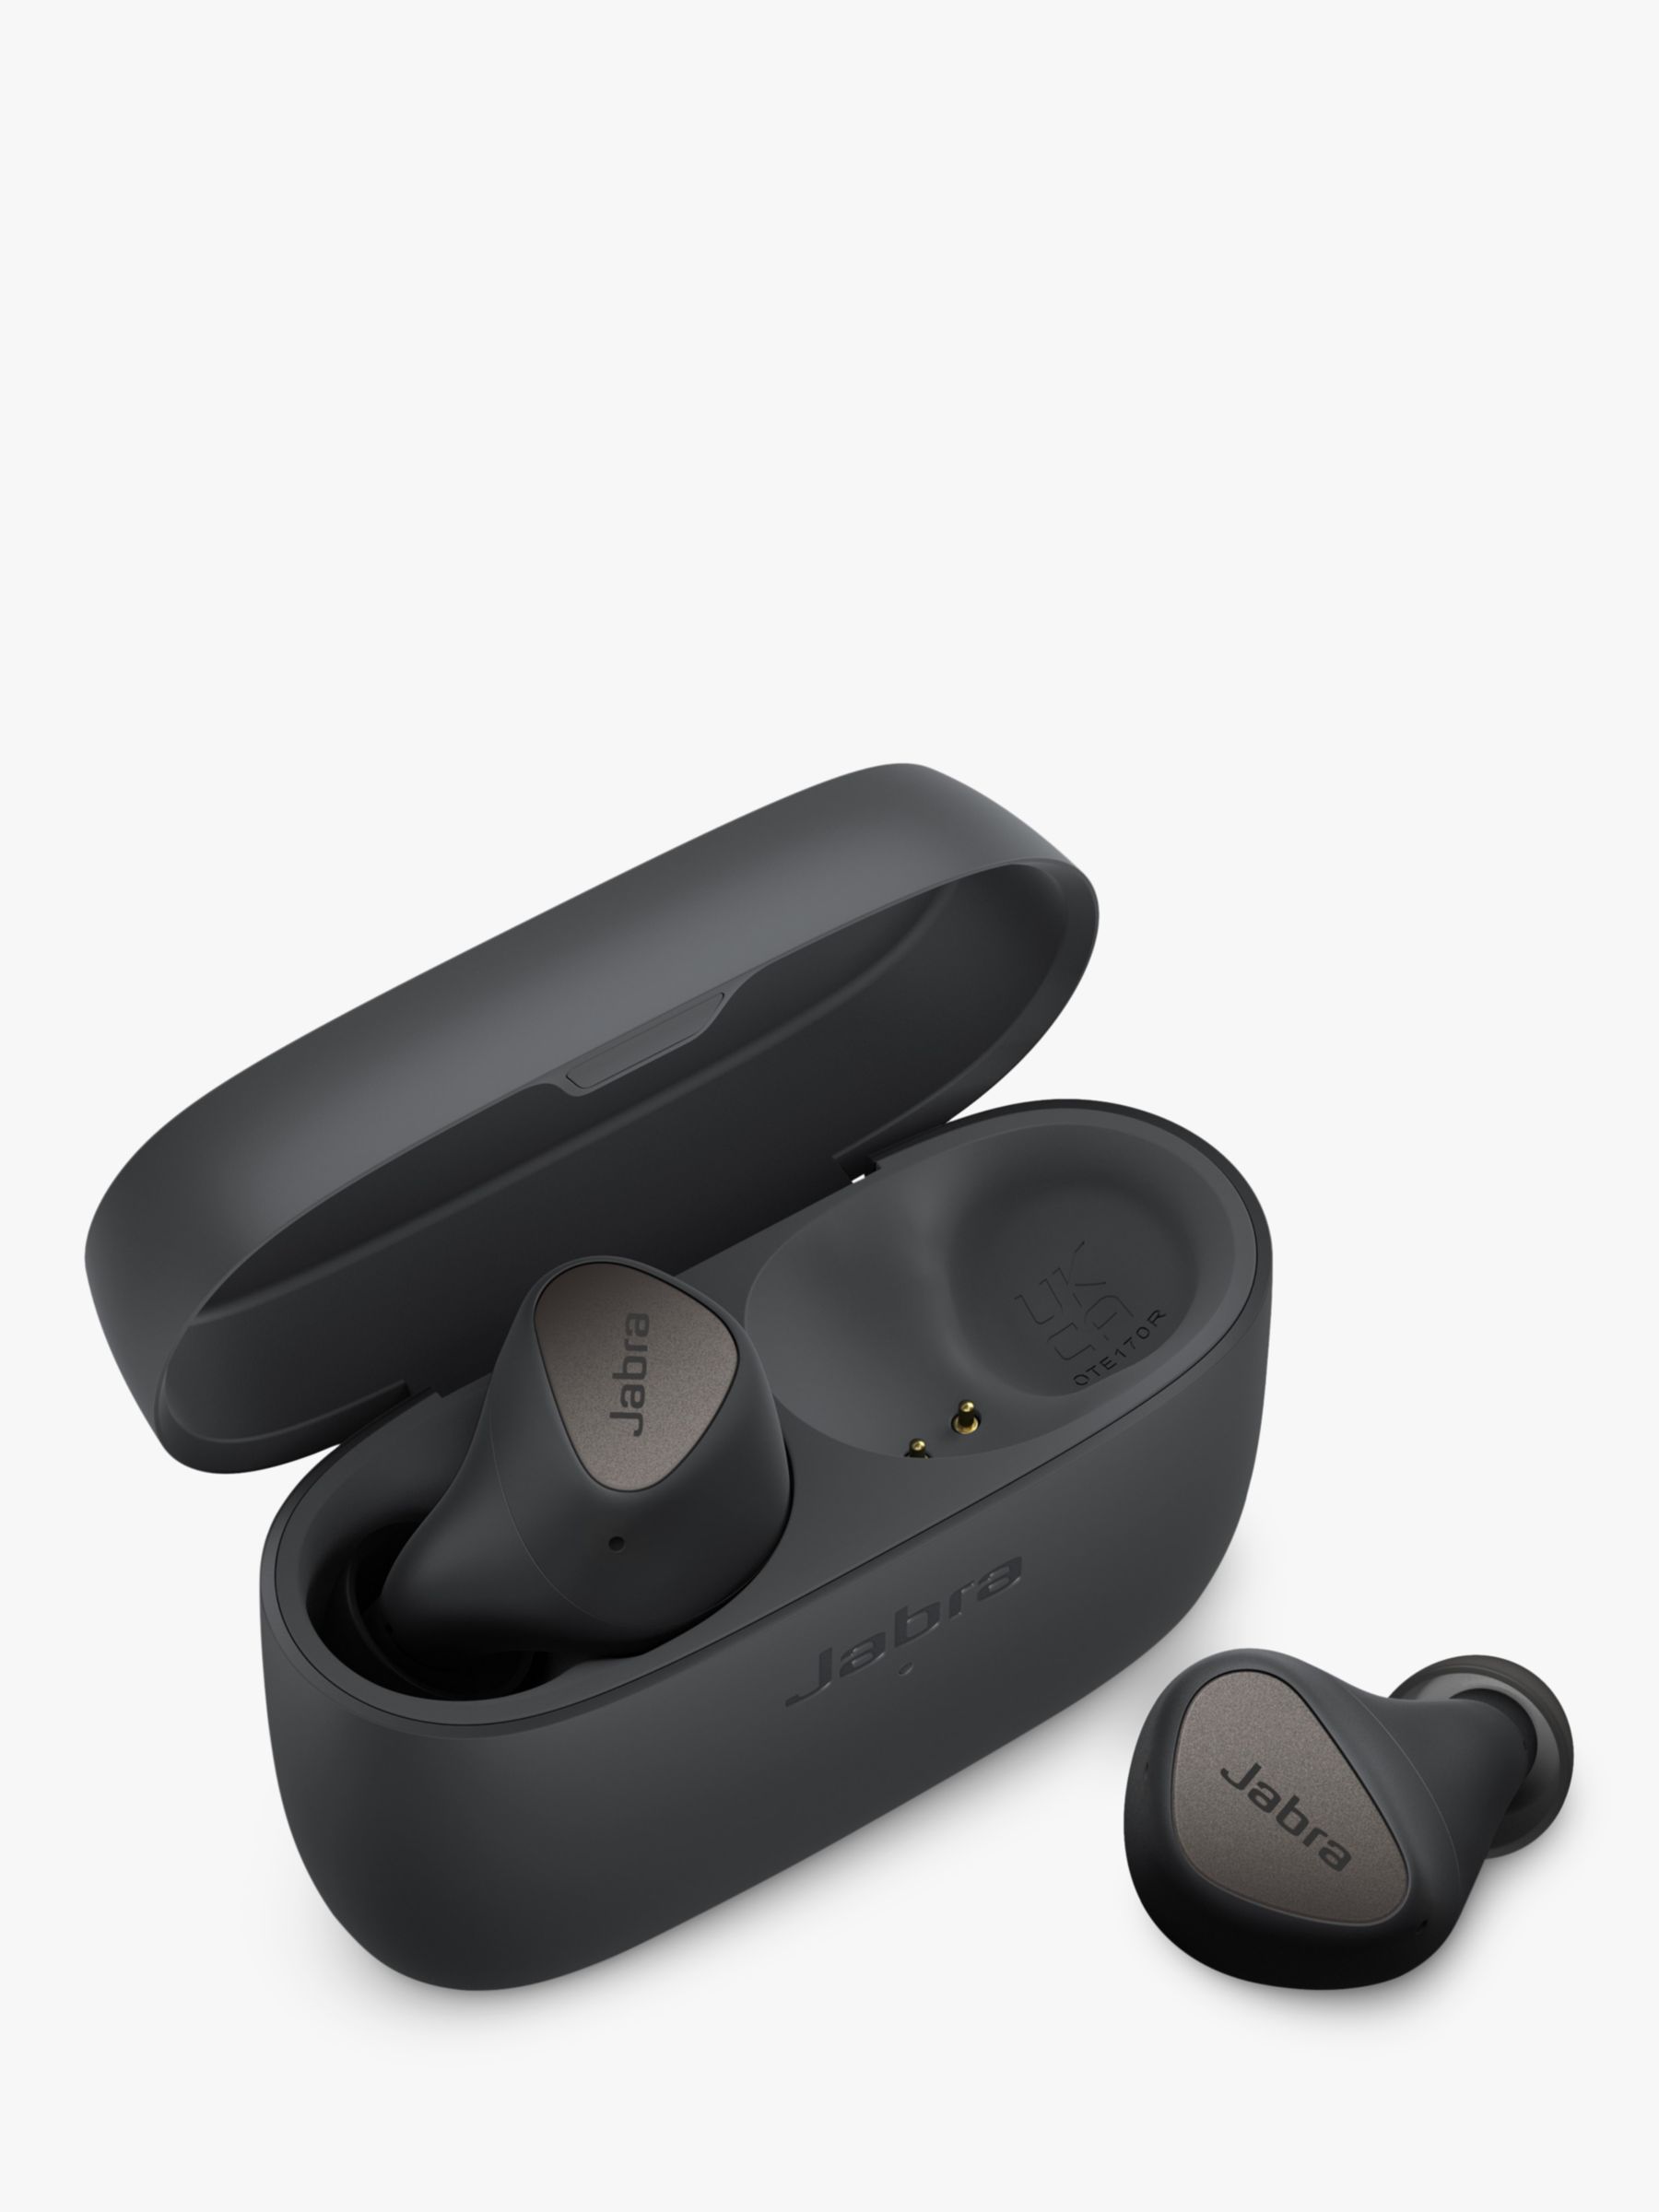 Buy the Jabra Elite 3 True Wireless In-Ear Headphones - Dark Grey